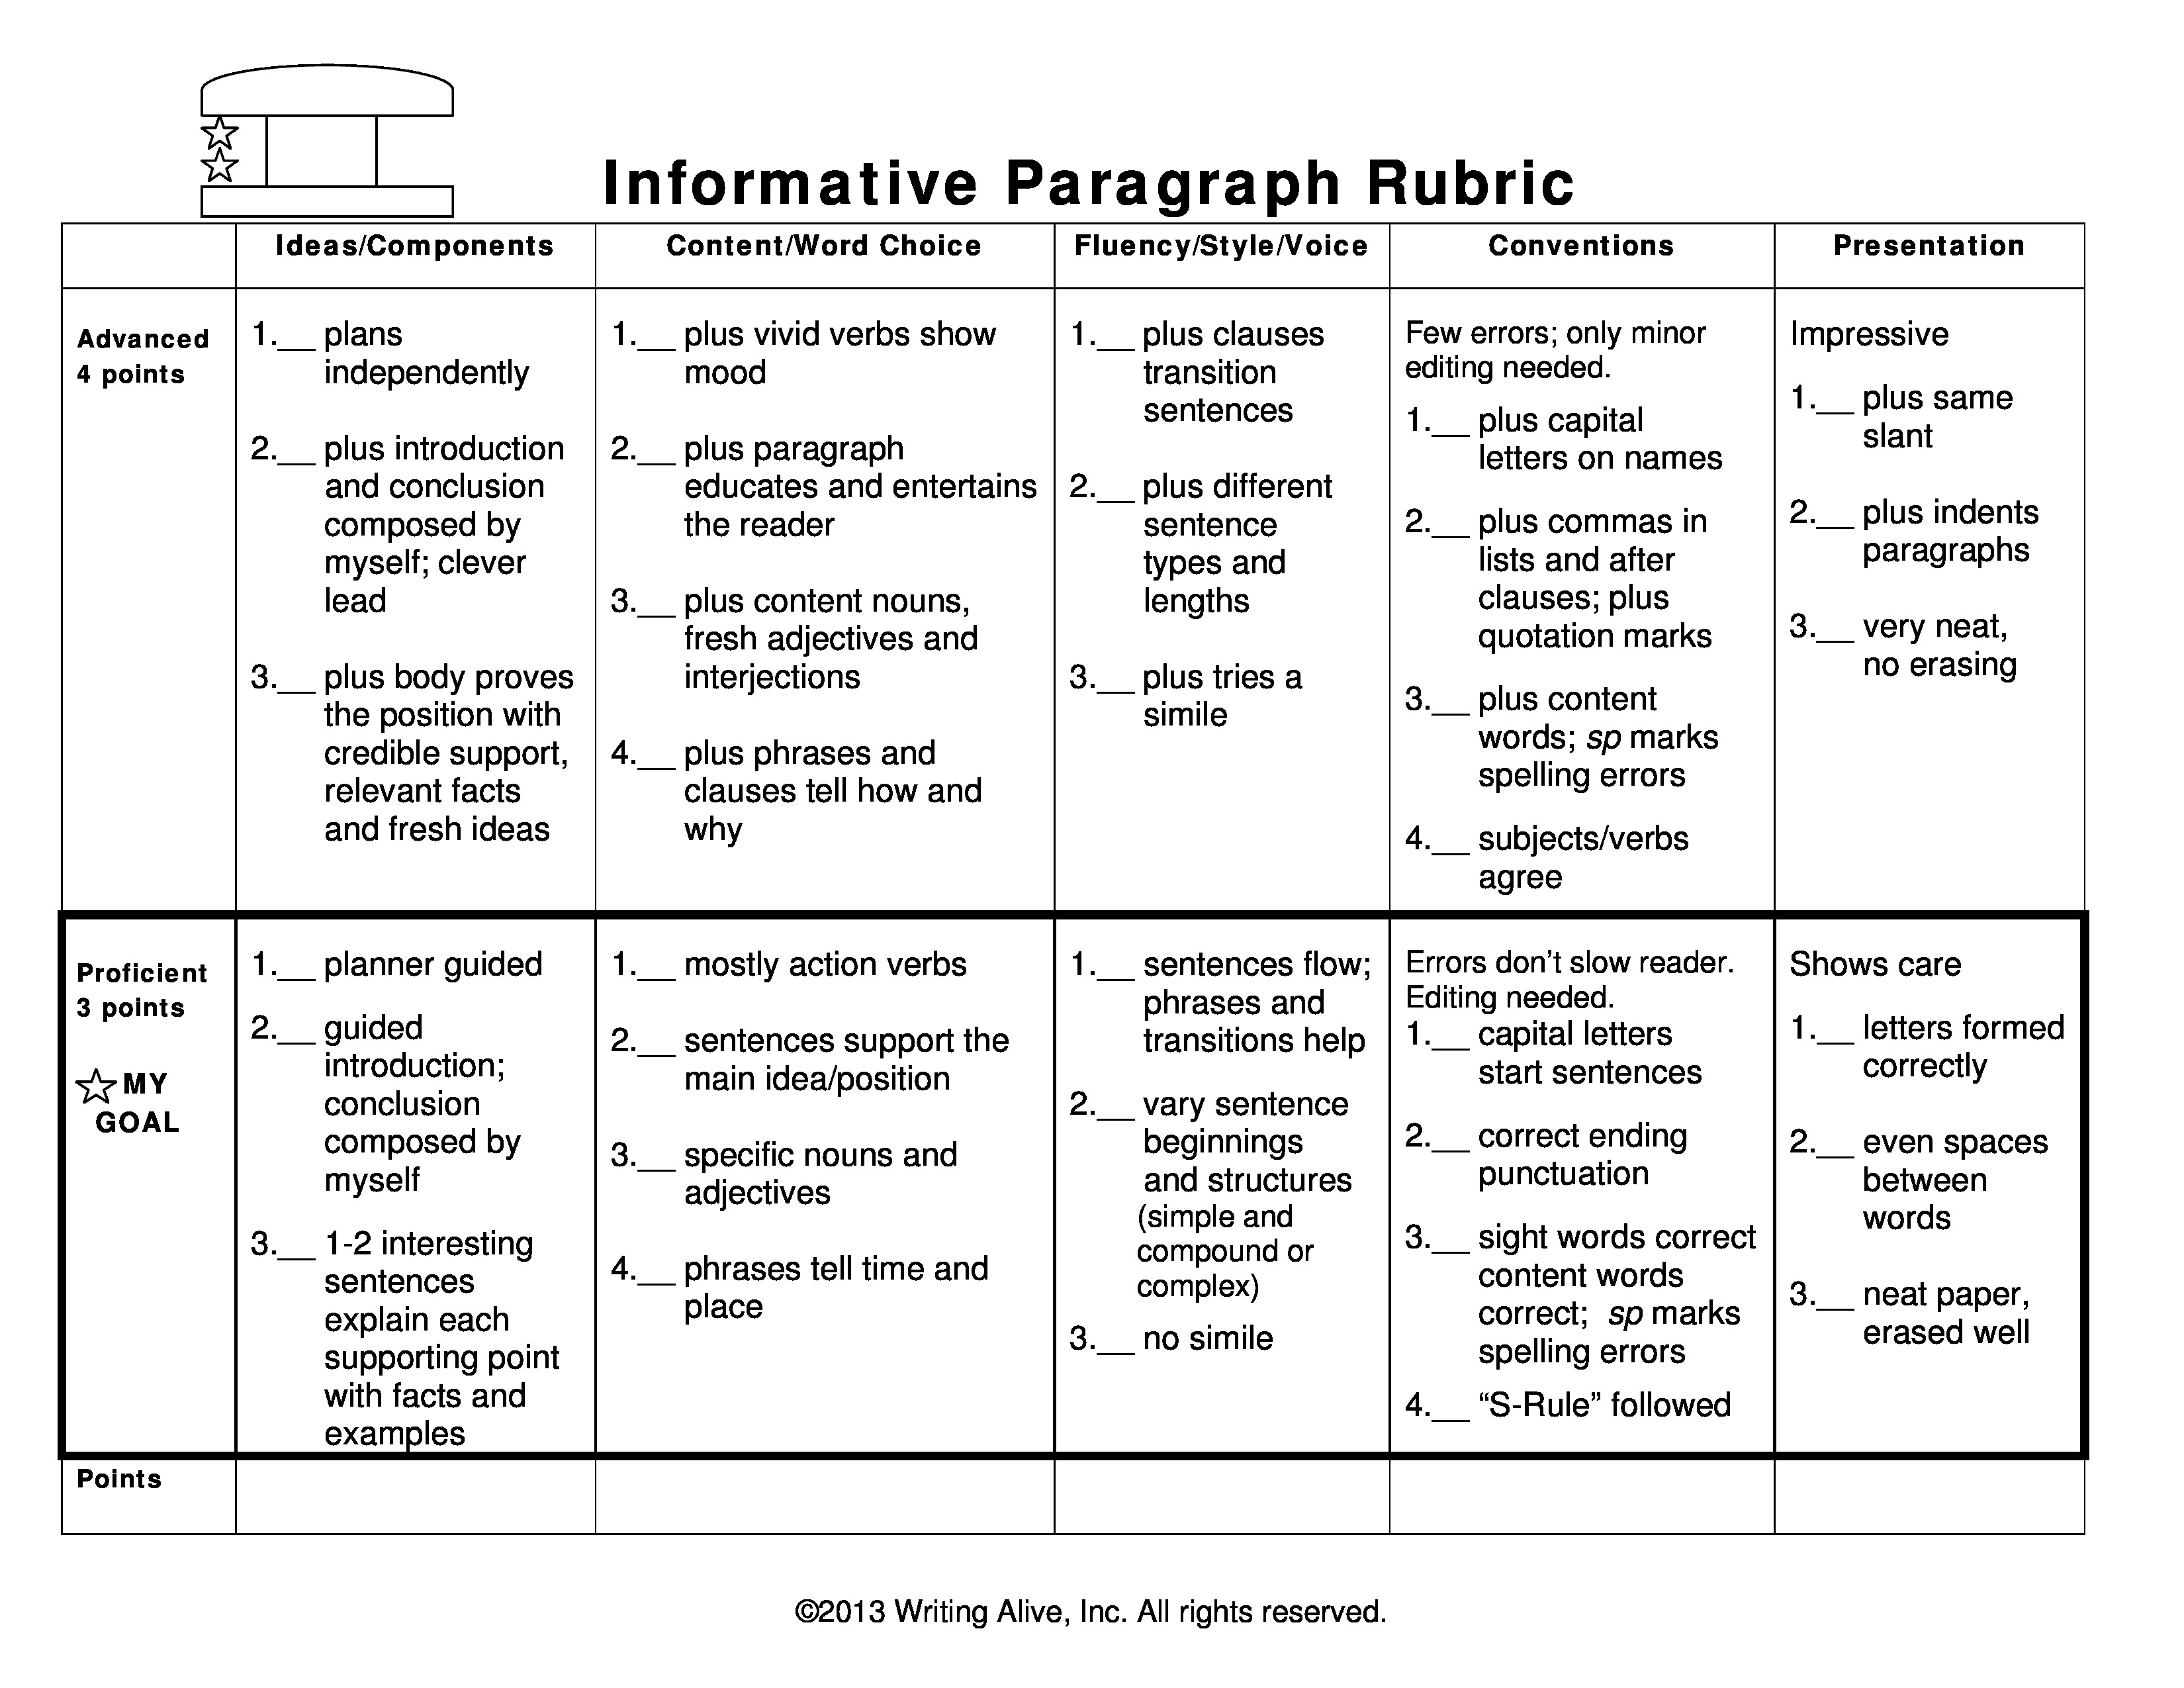 Rubric Informative Paragraph Rubric View